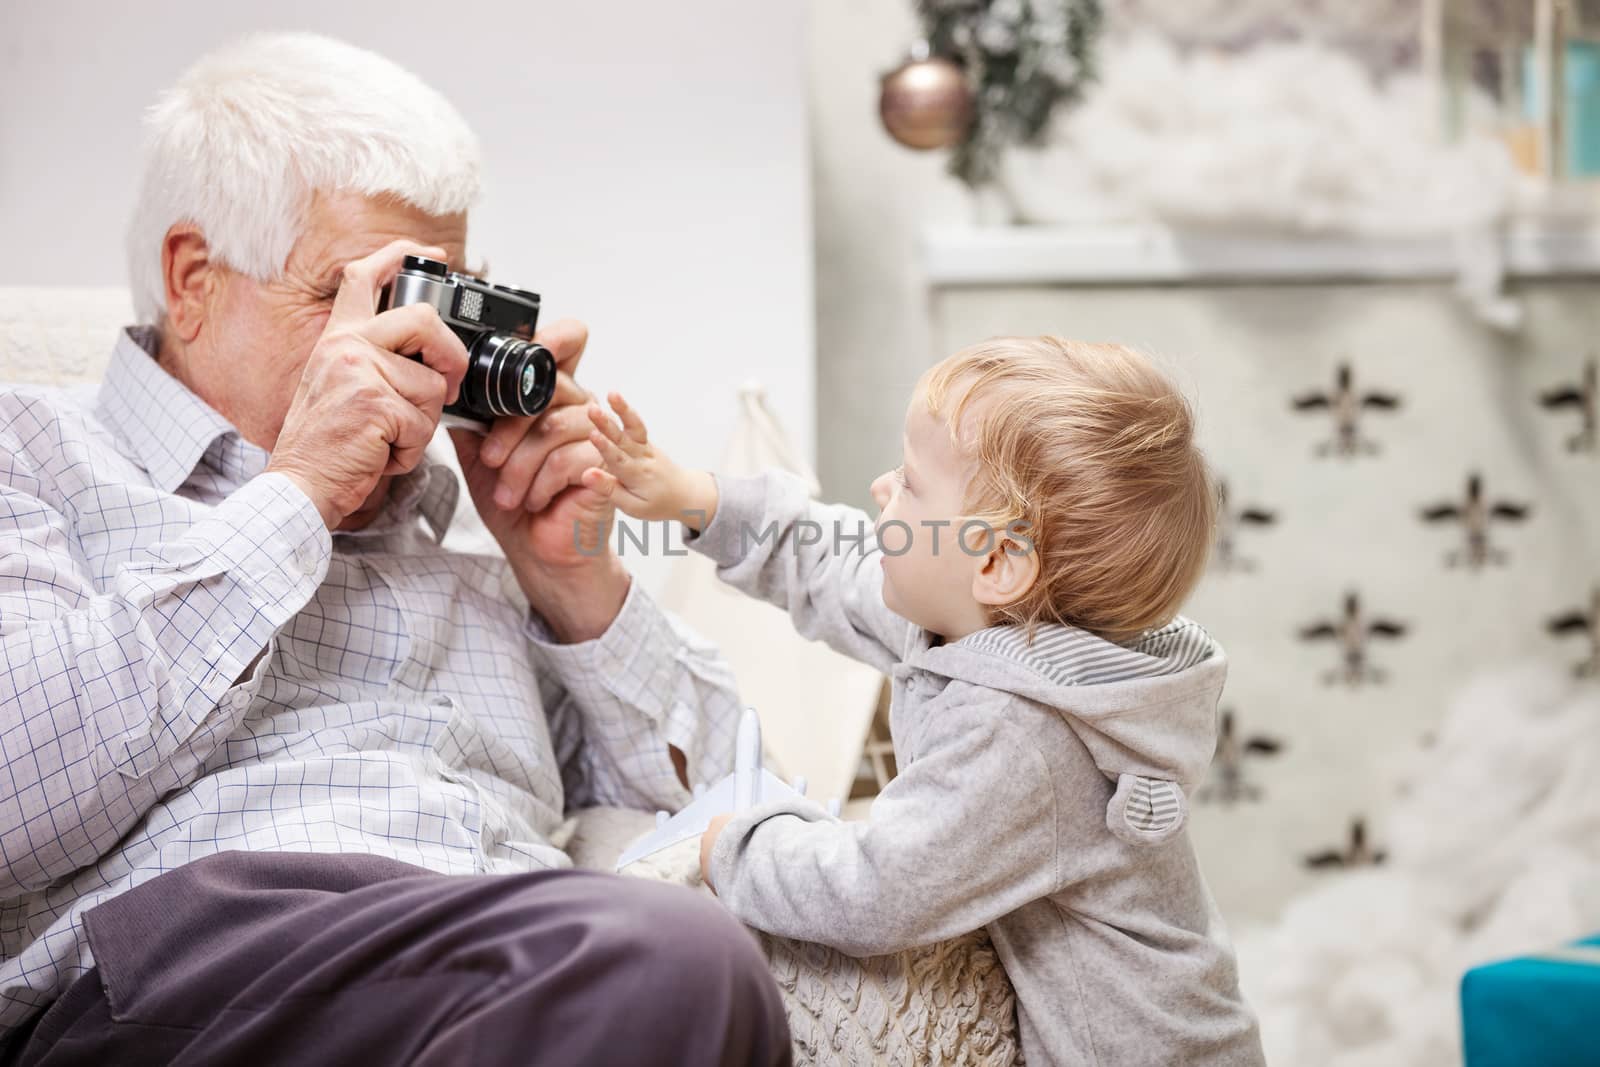 Senior man taking photo of his toddler grandson while sitting near Christmas tree at home